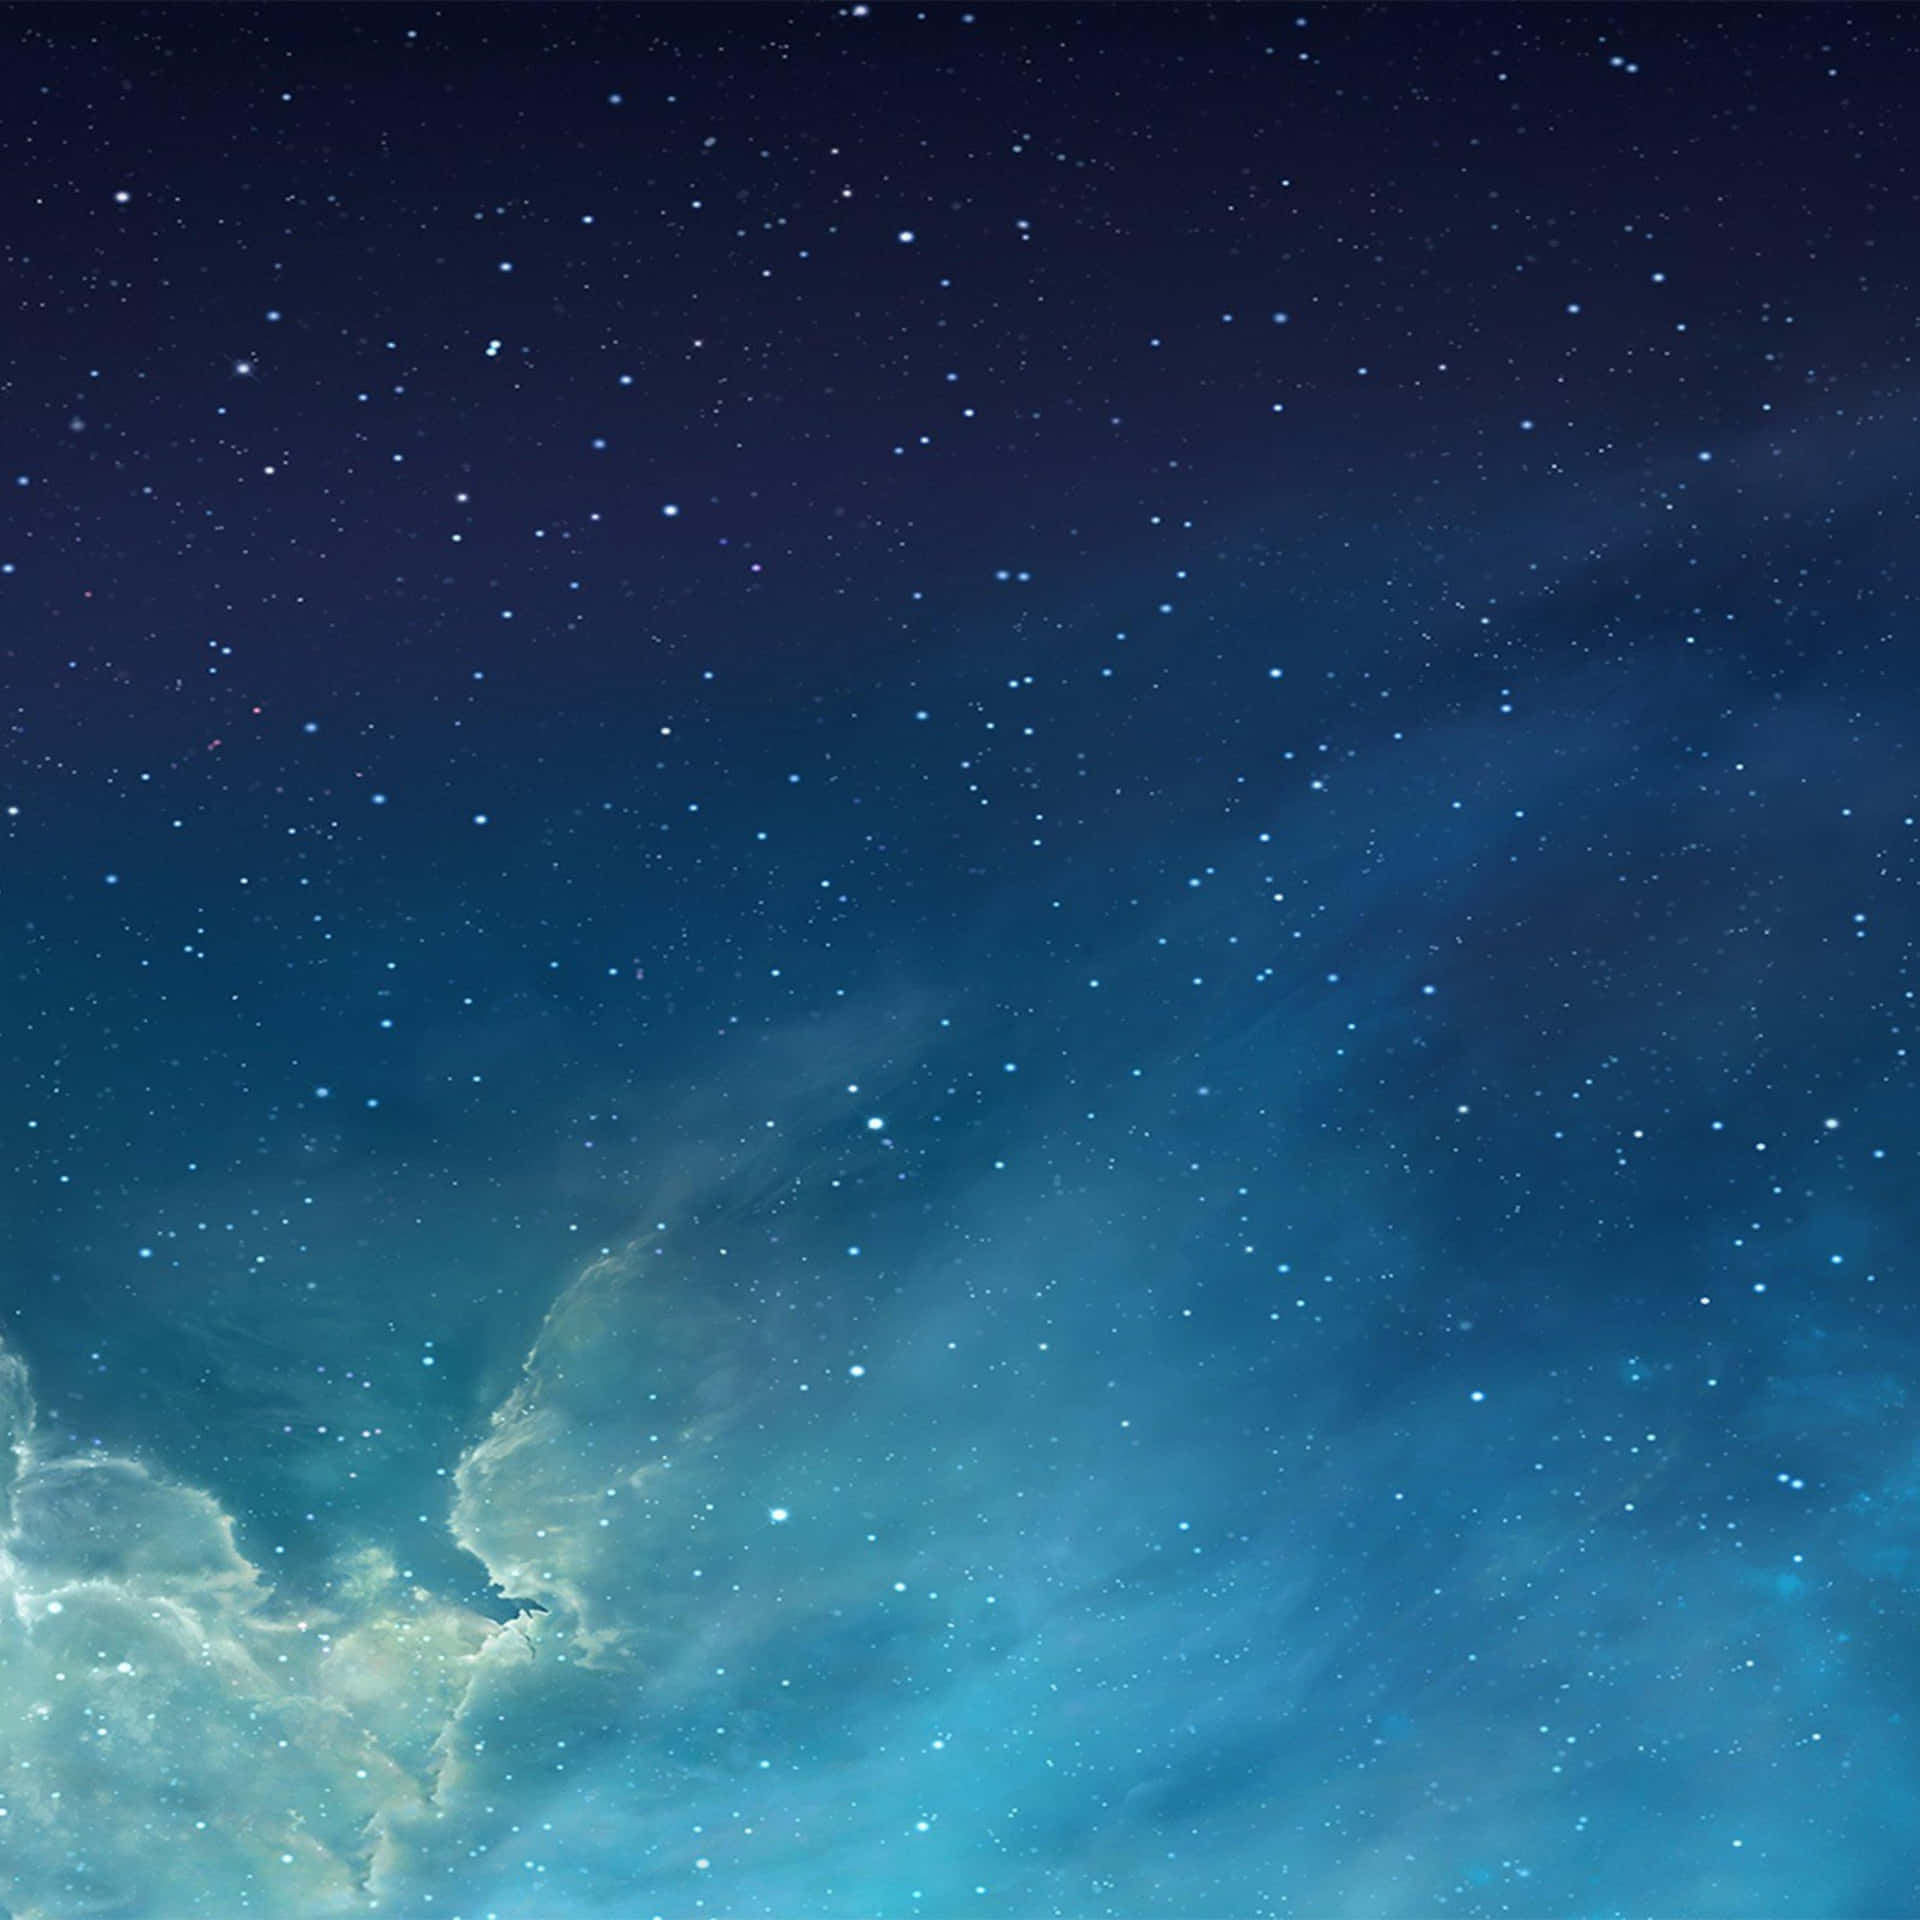 Cool iPad Pro Blue Starry Night Sky Wallpaper